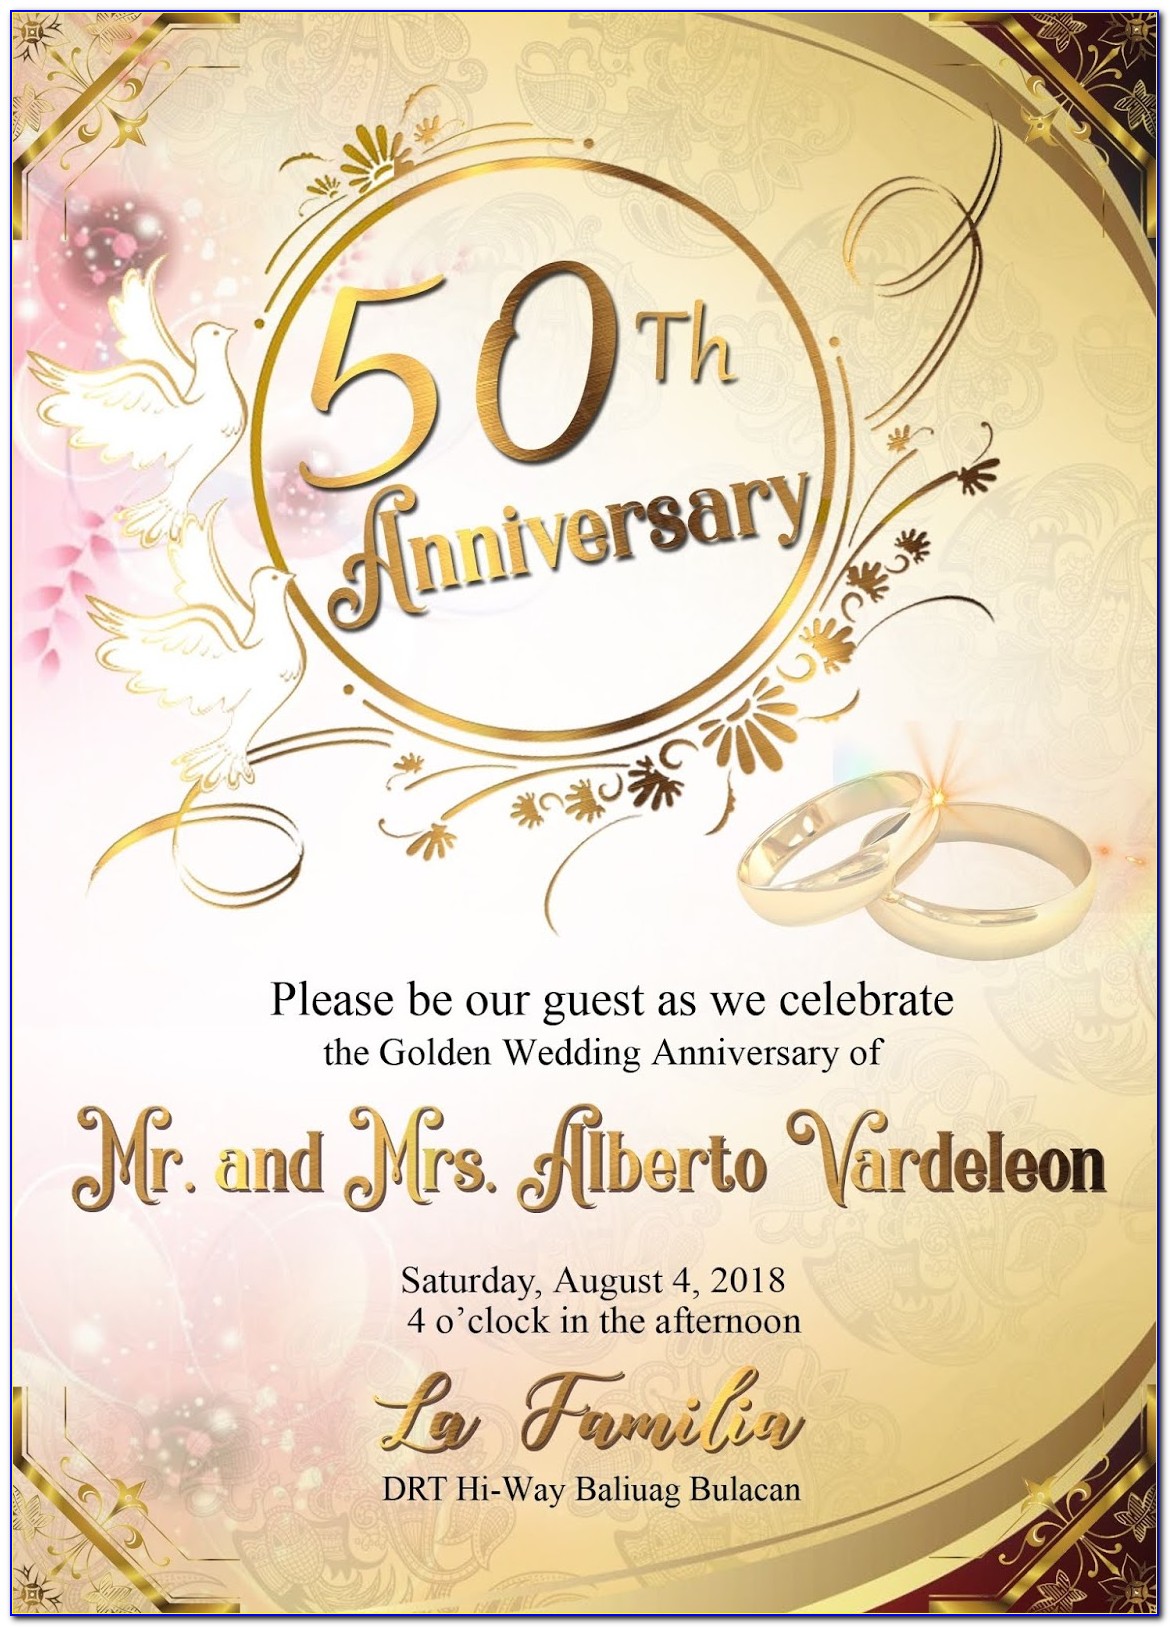 Golden Wedding Anniversary Invitation Templates Free